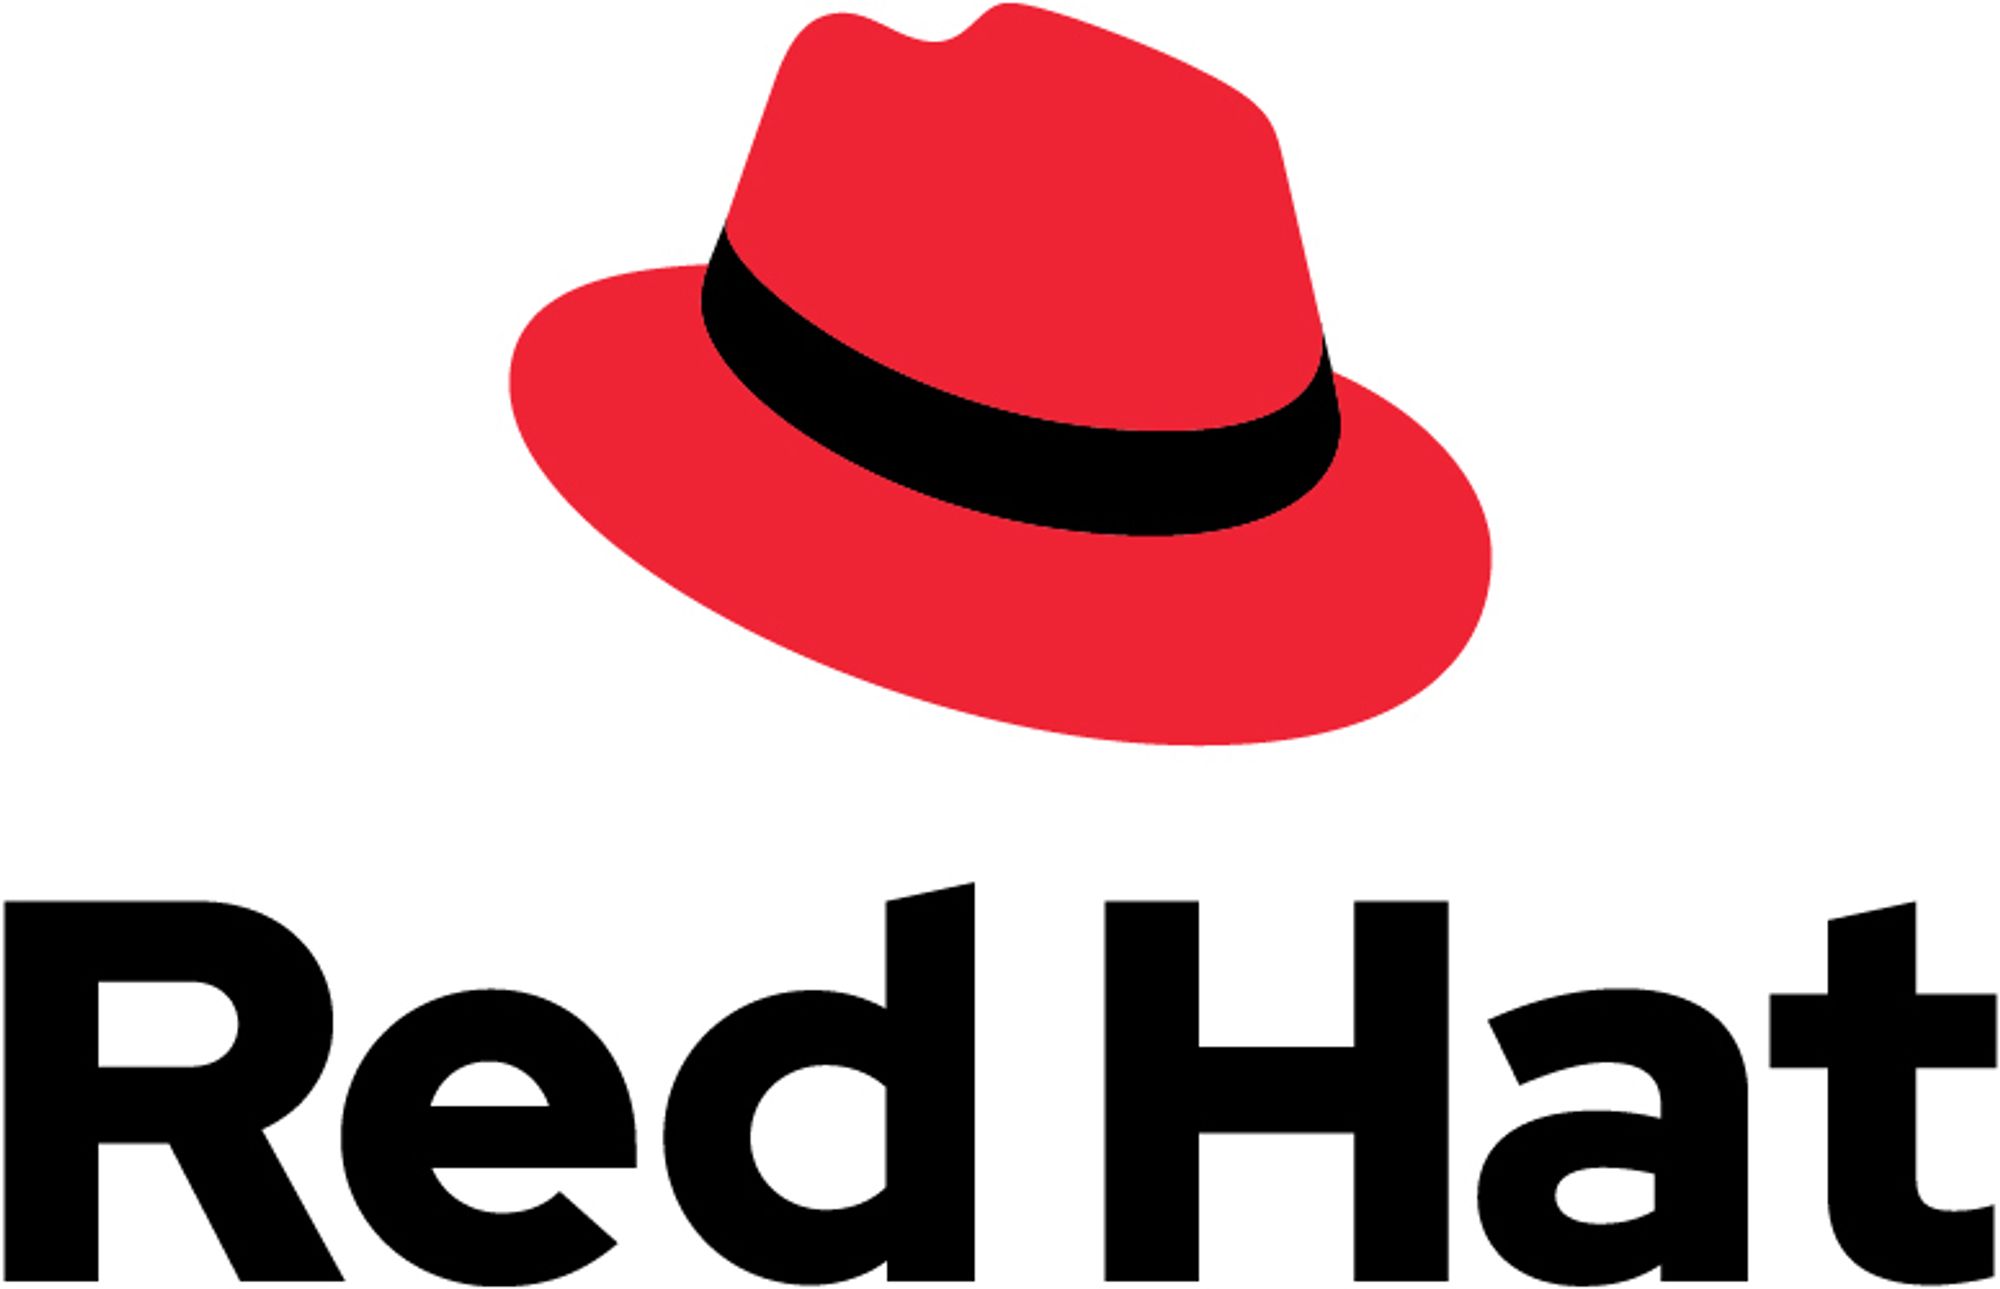 Ред хат. Red hat логотип. Red hat Enterprise Linux logo. Шляпа Red hat. Шляпа лого.